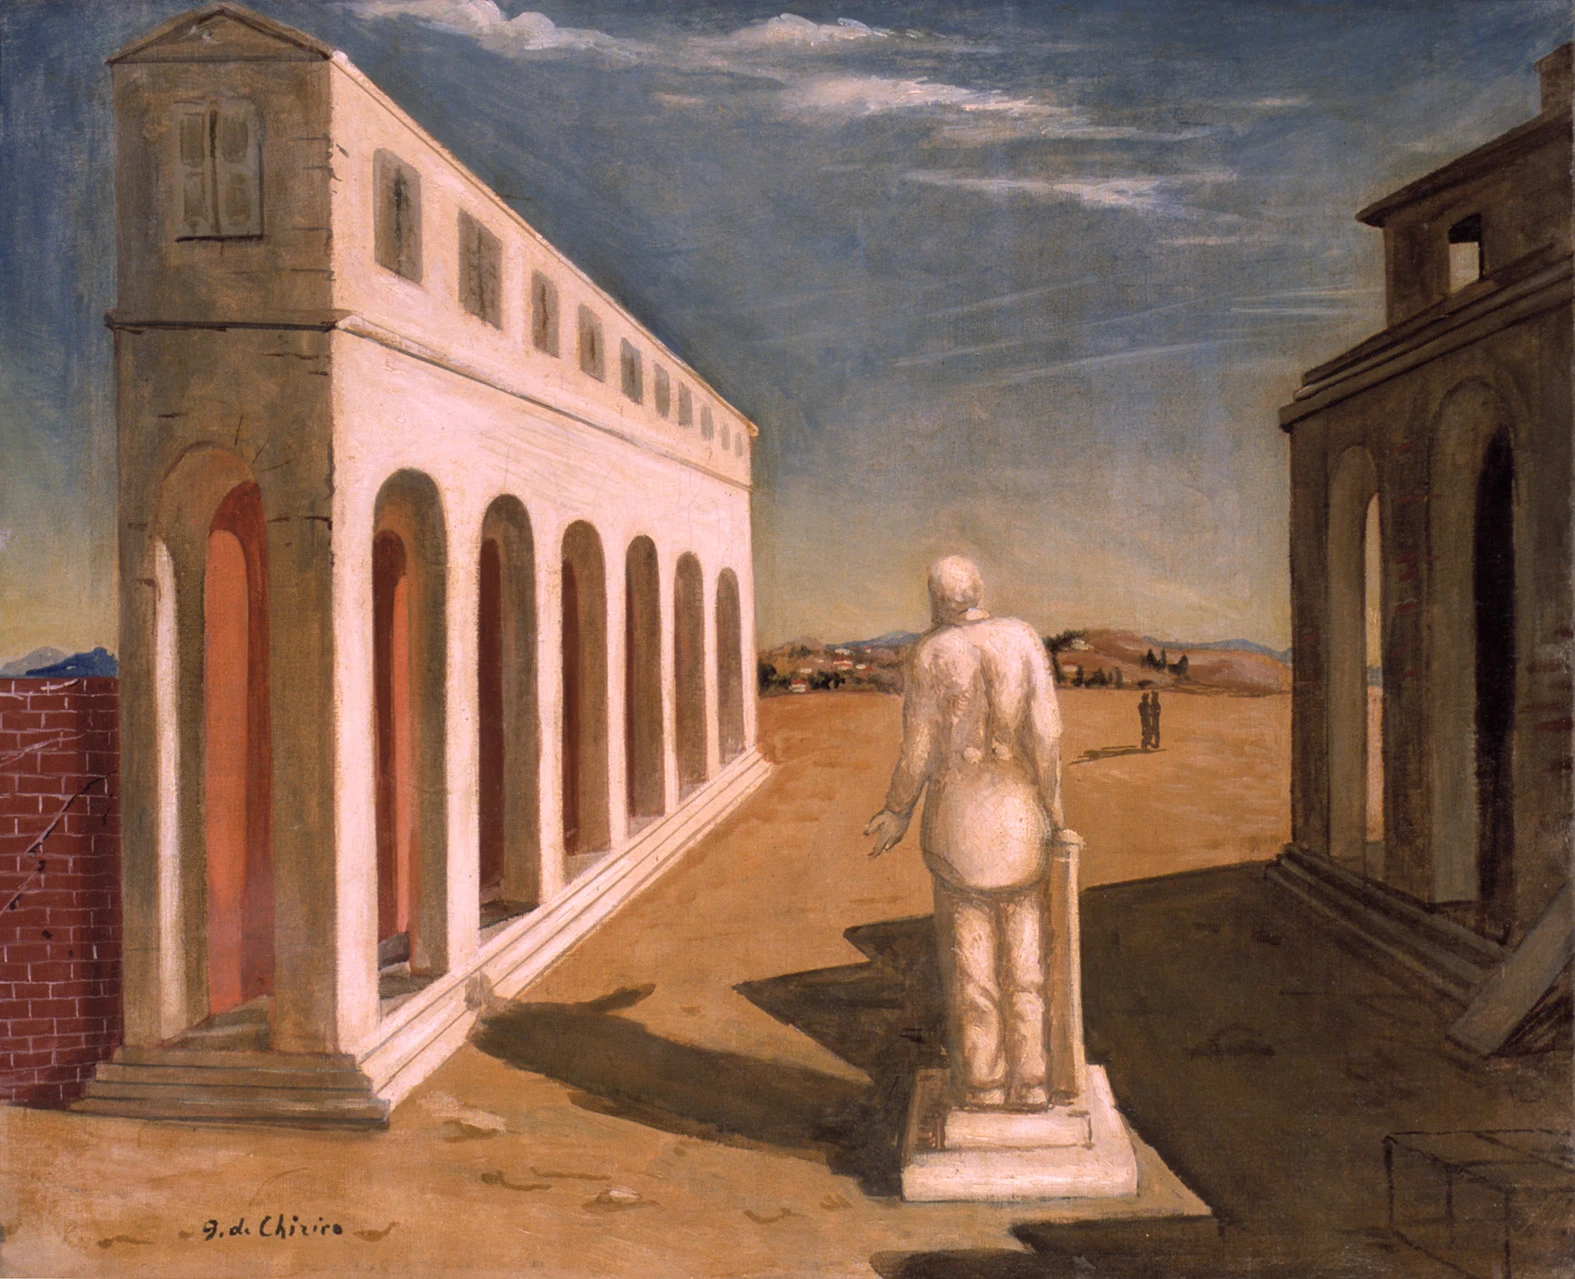 Giorgio De Chirico 1888-1978 | Italian surrealist painter | The Metaphysical art movement